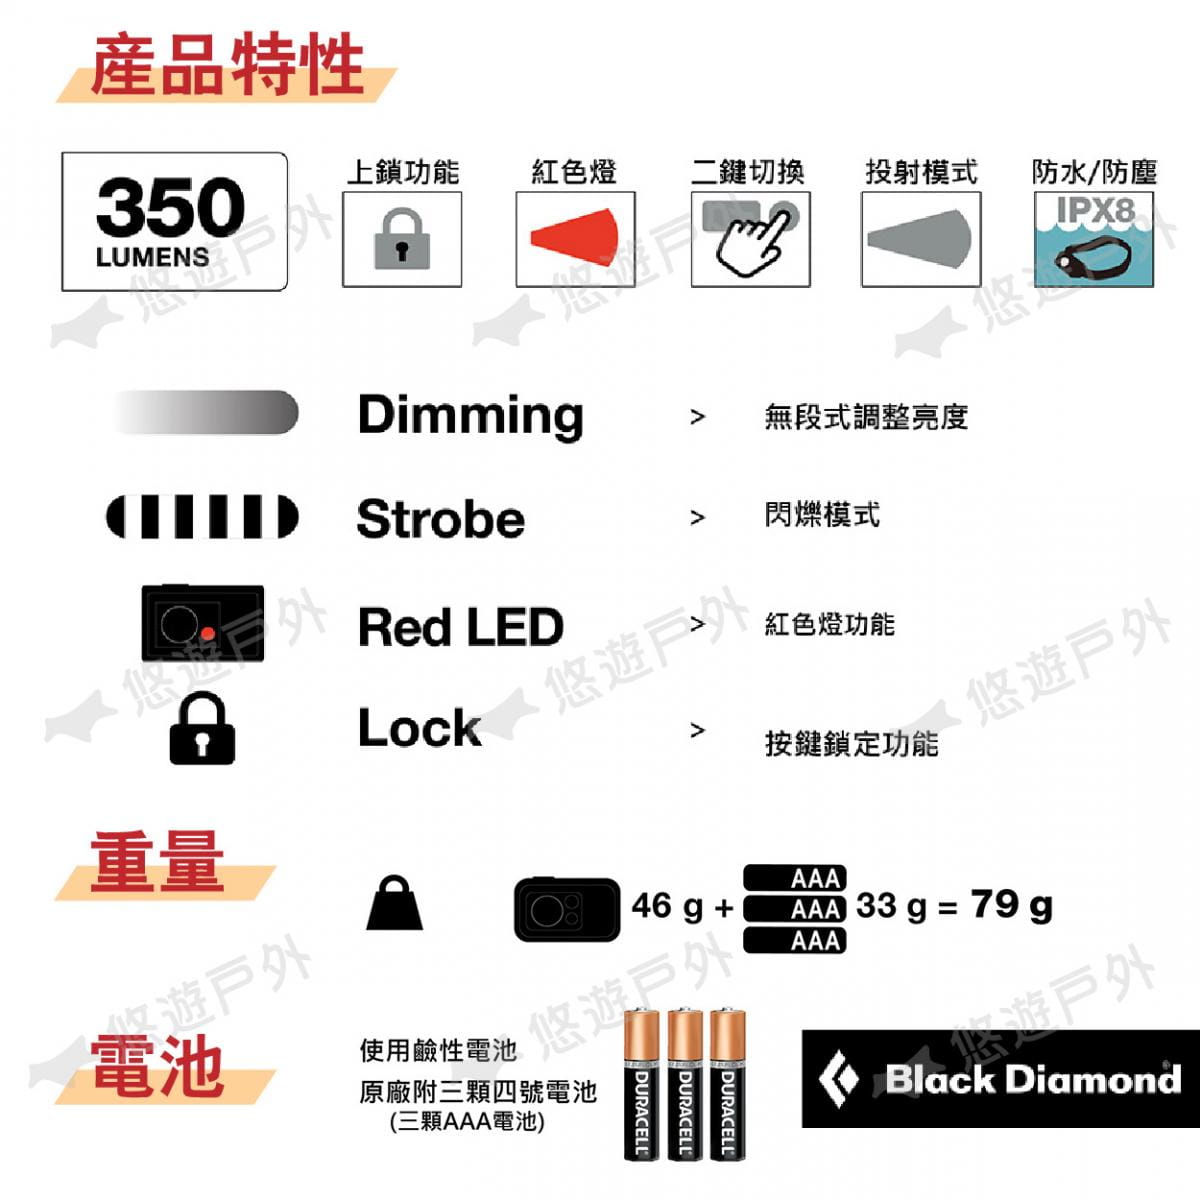 【Black Diamond】COSMO 350頭燈 S22/S23 (悠遊戶外) 5